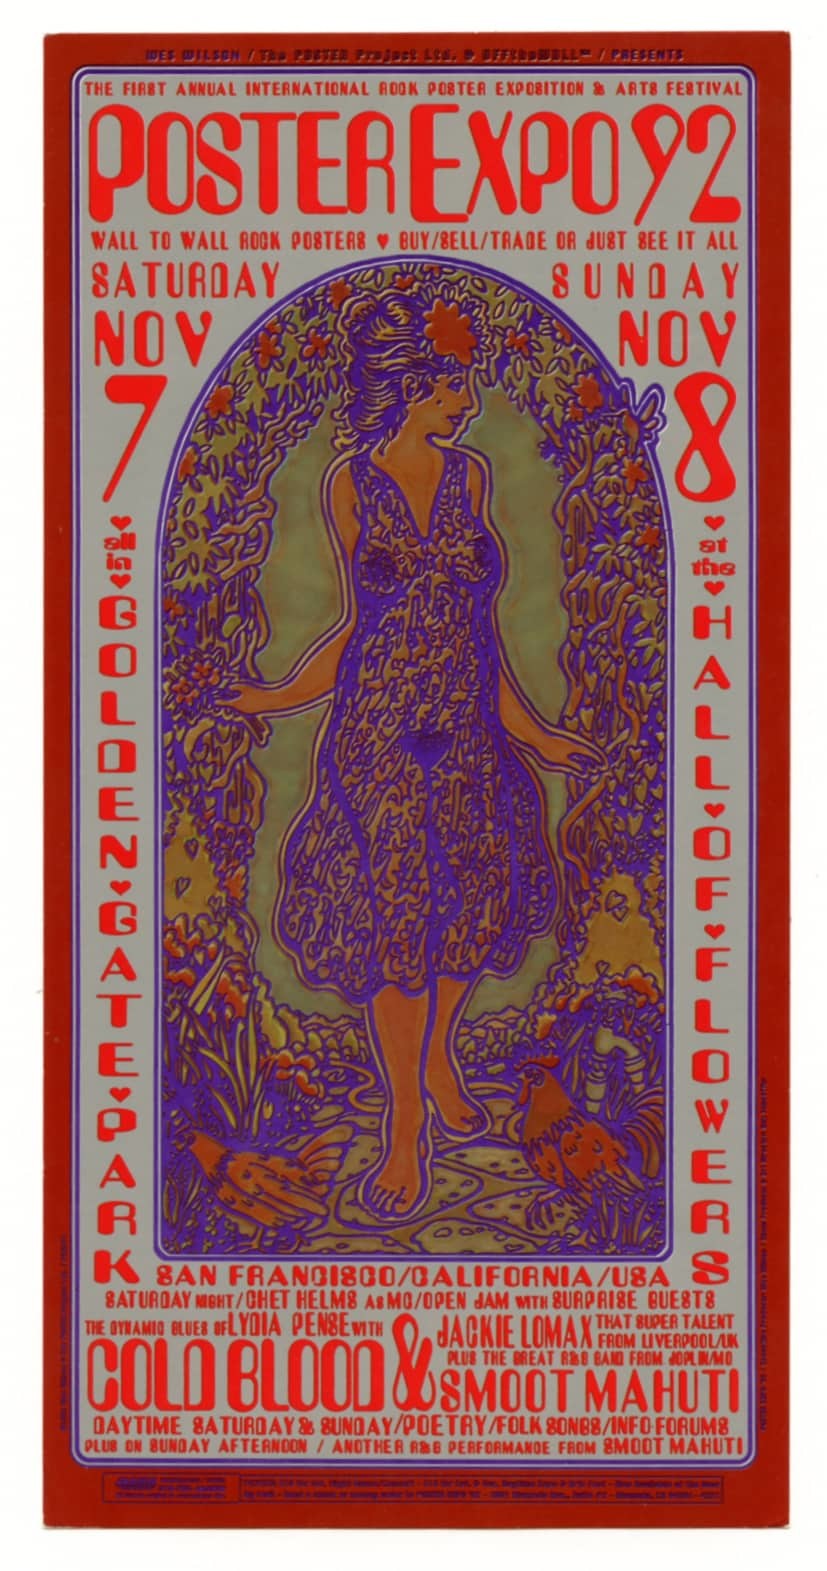 Wes Wilson Handbill Rock Poster Expo 92 Golden Gate Park San Francisco